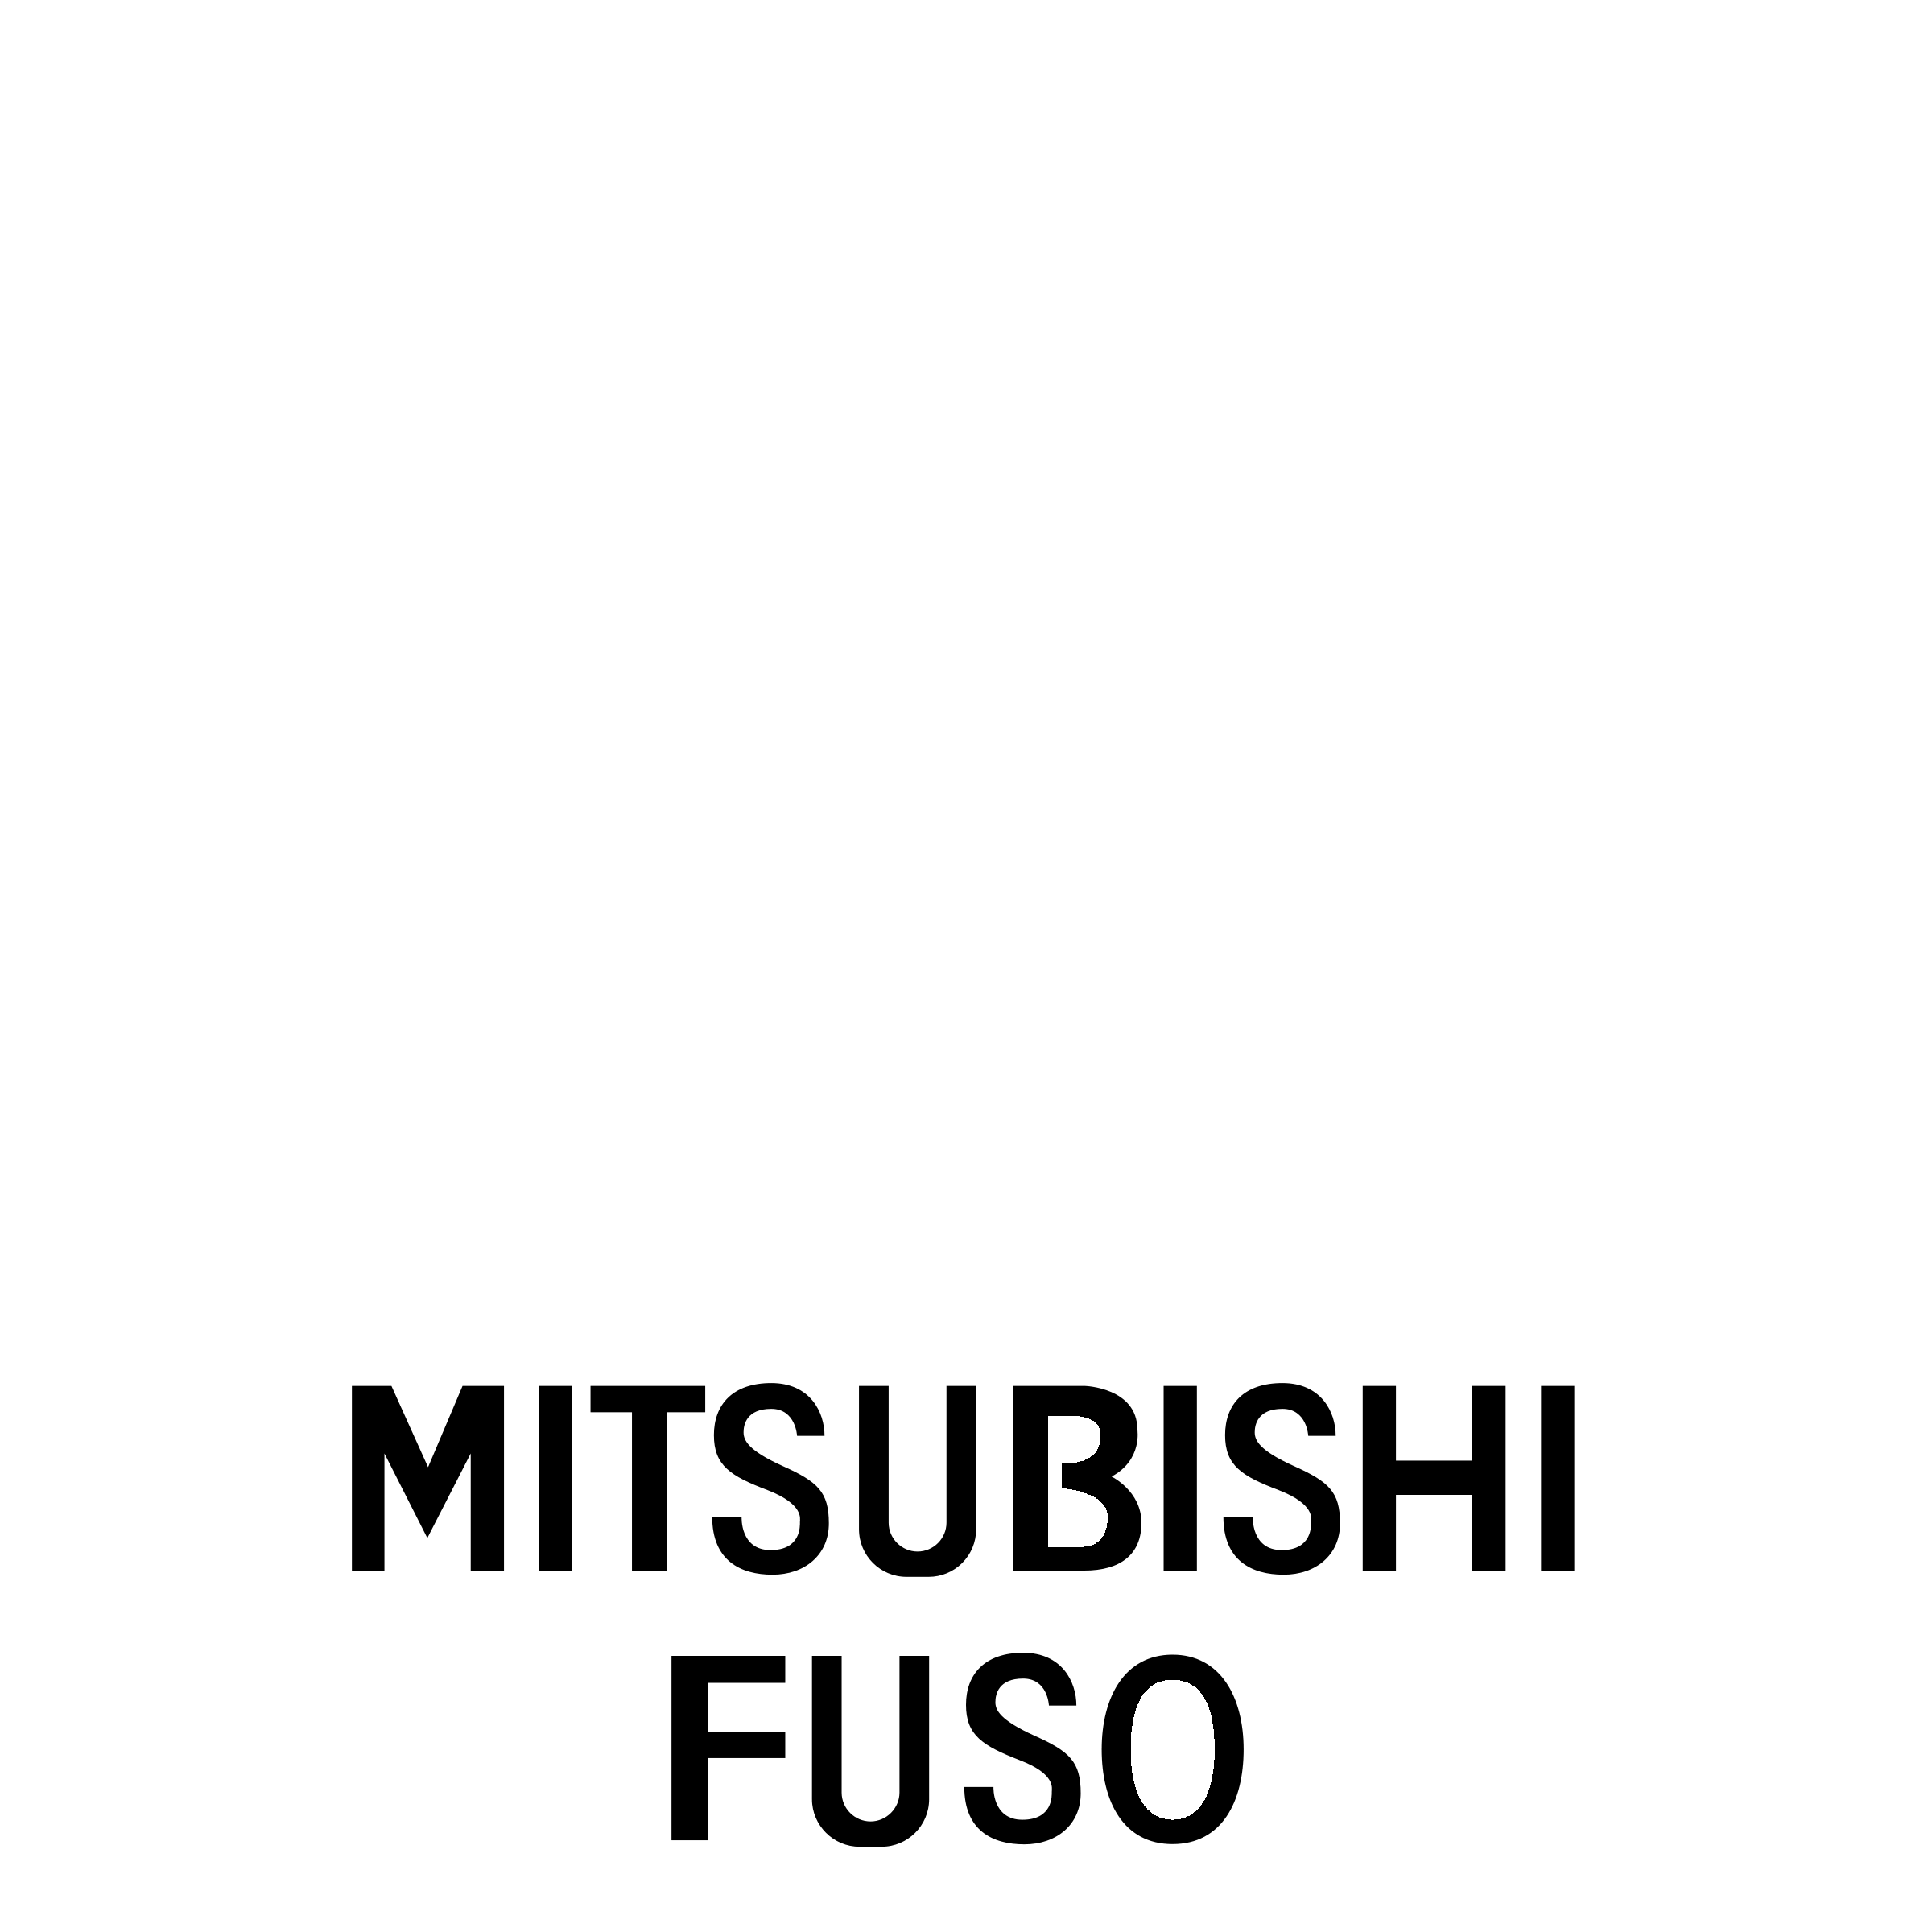 Mitsubishi Fuso Logo - Mitsubishi Fuso Logo PNG Transparent & SVG Vector - Freebie Supply